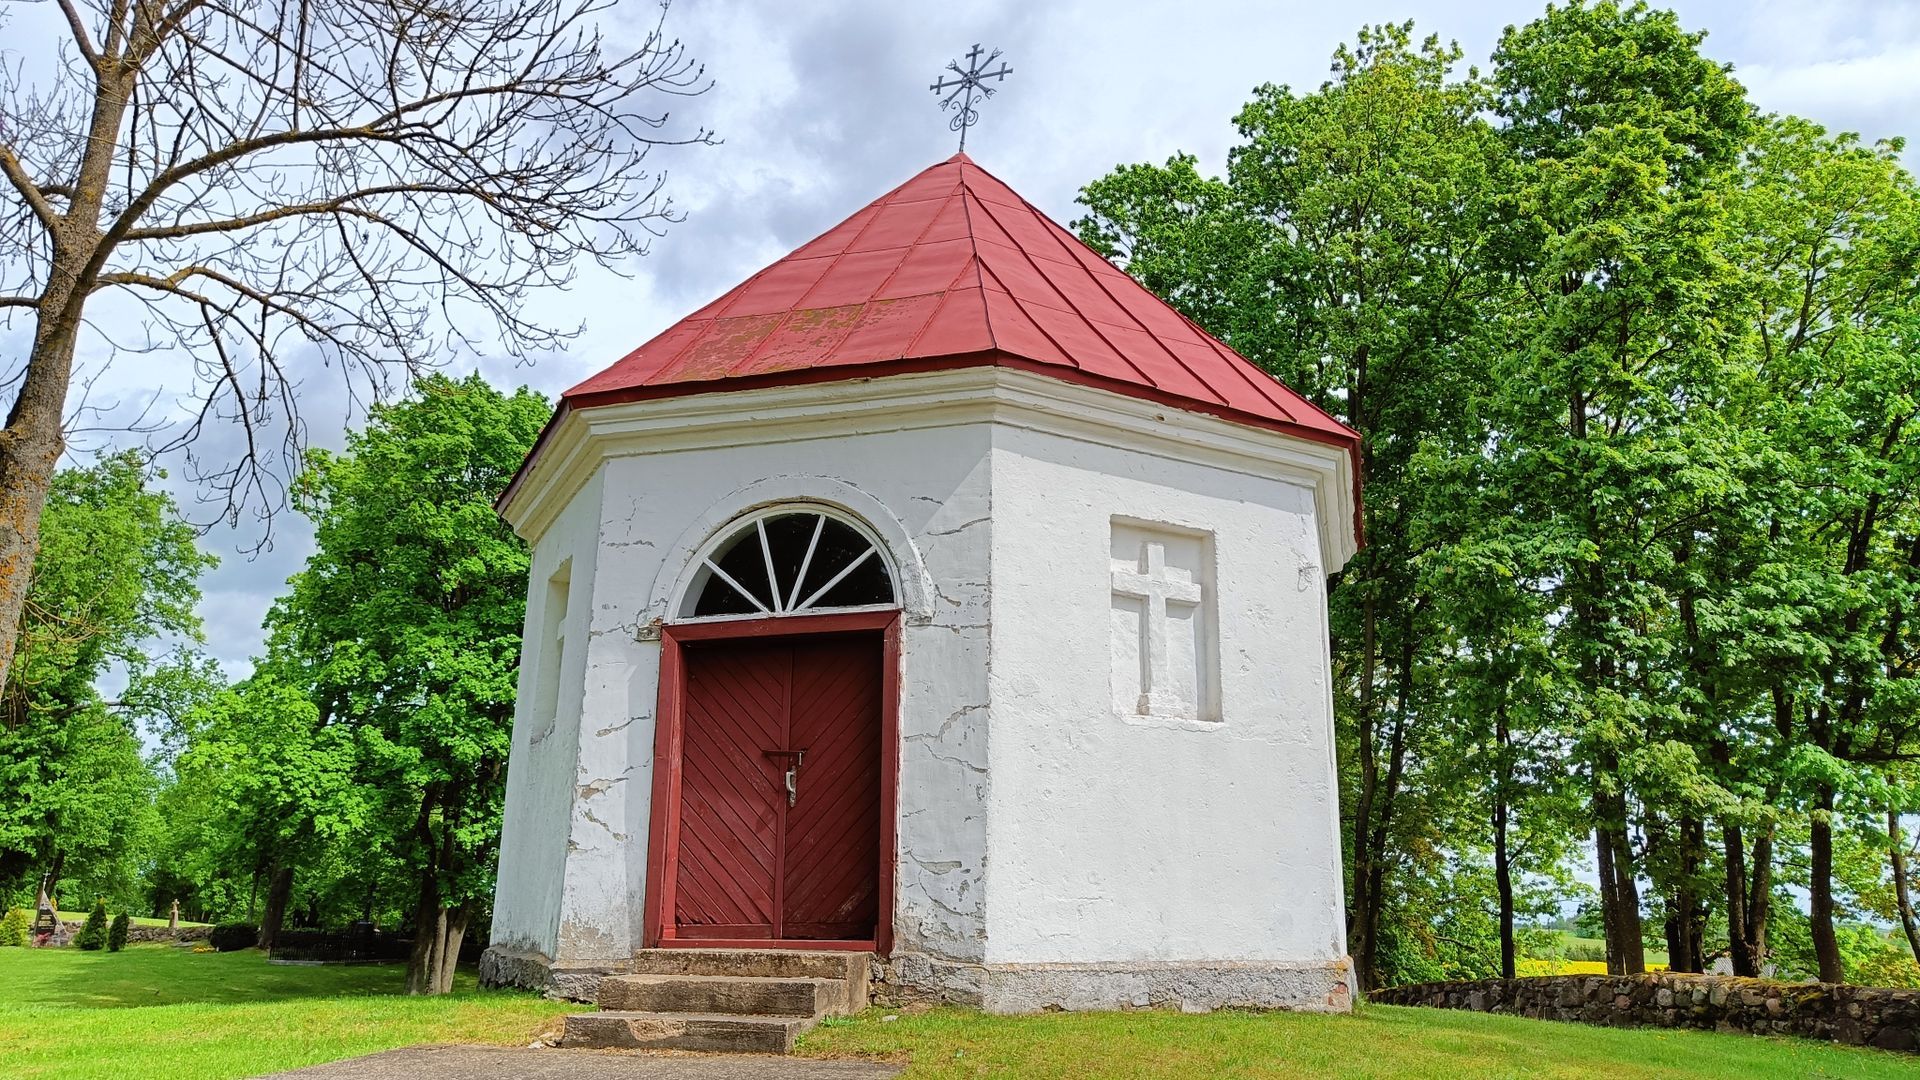 Bartninkai Chapel